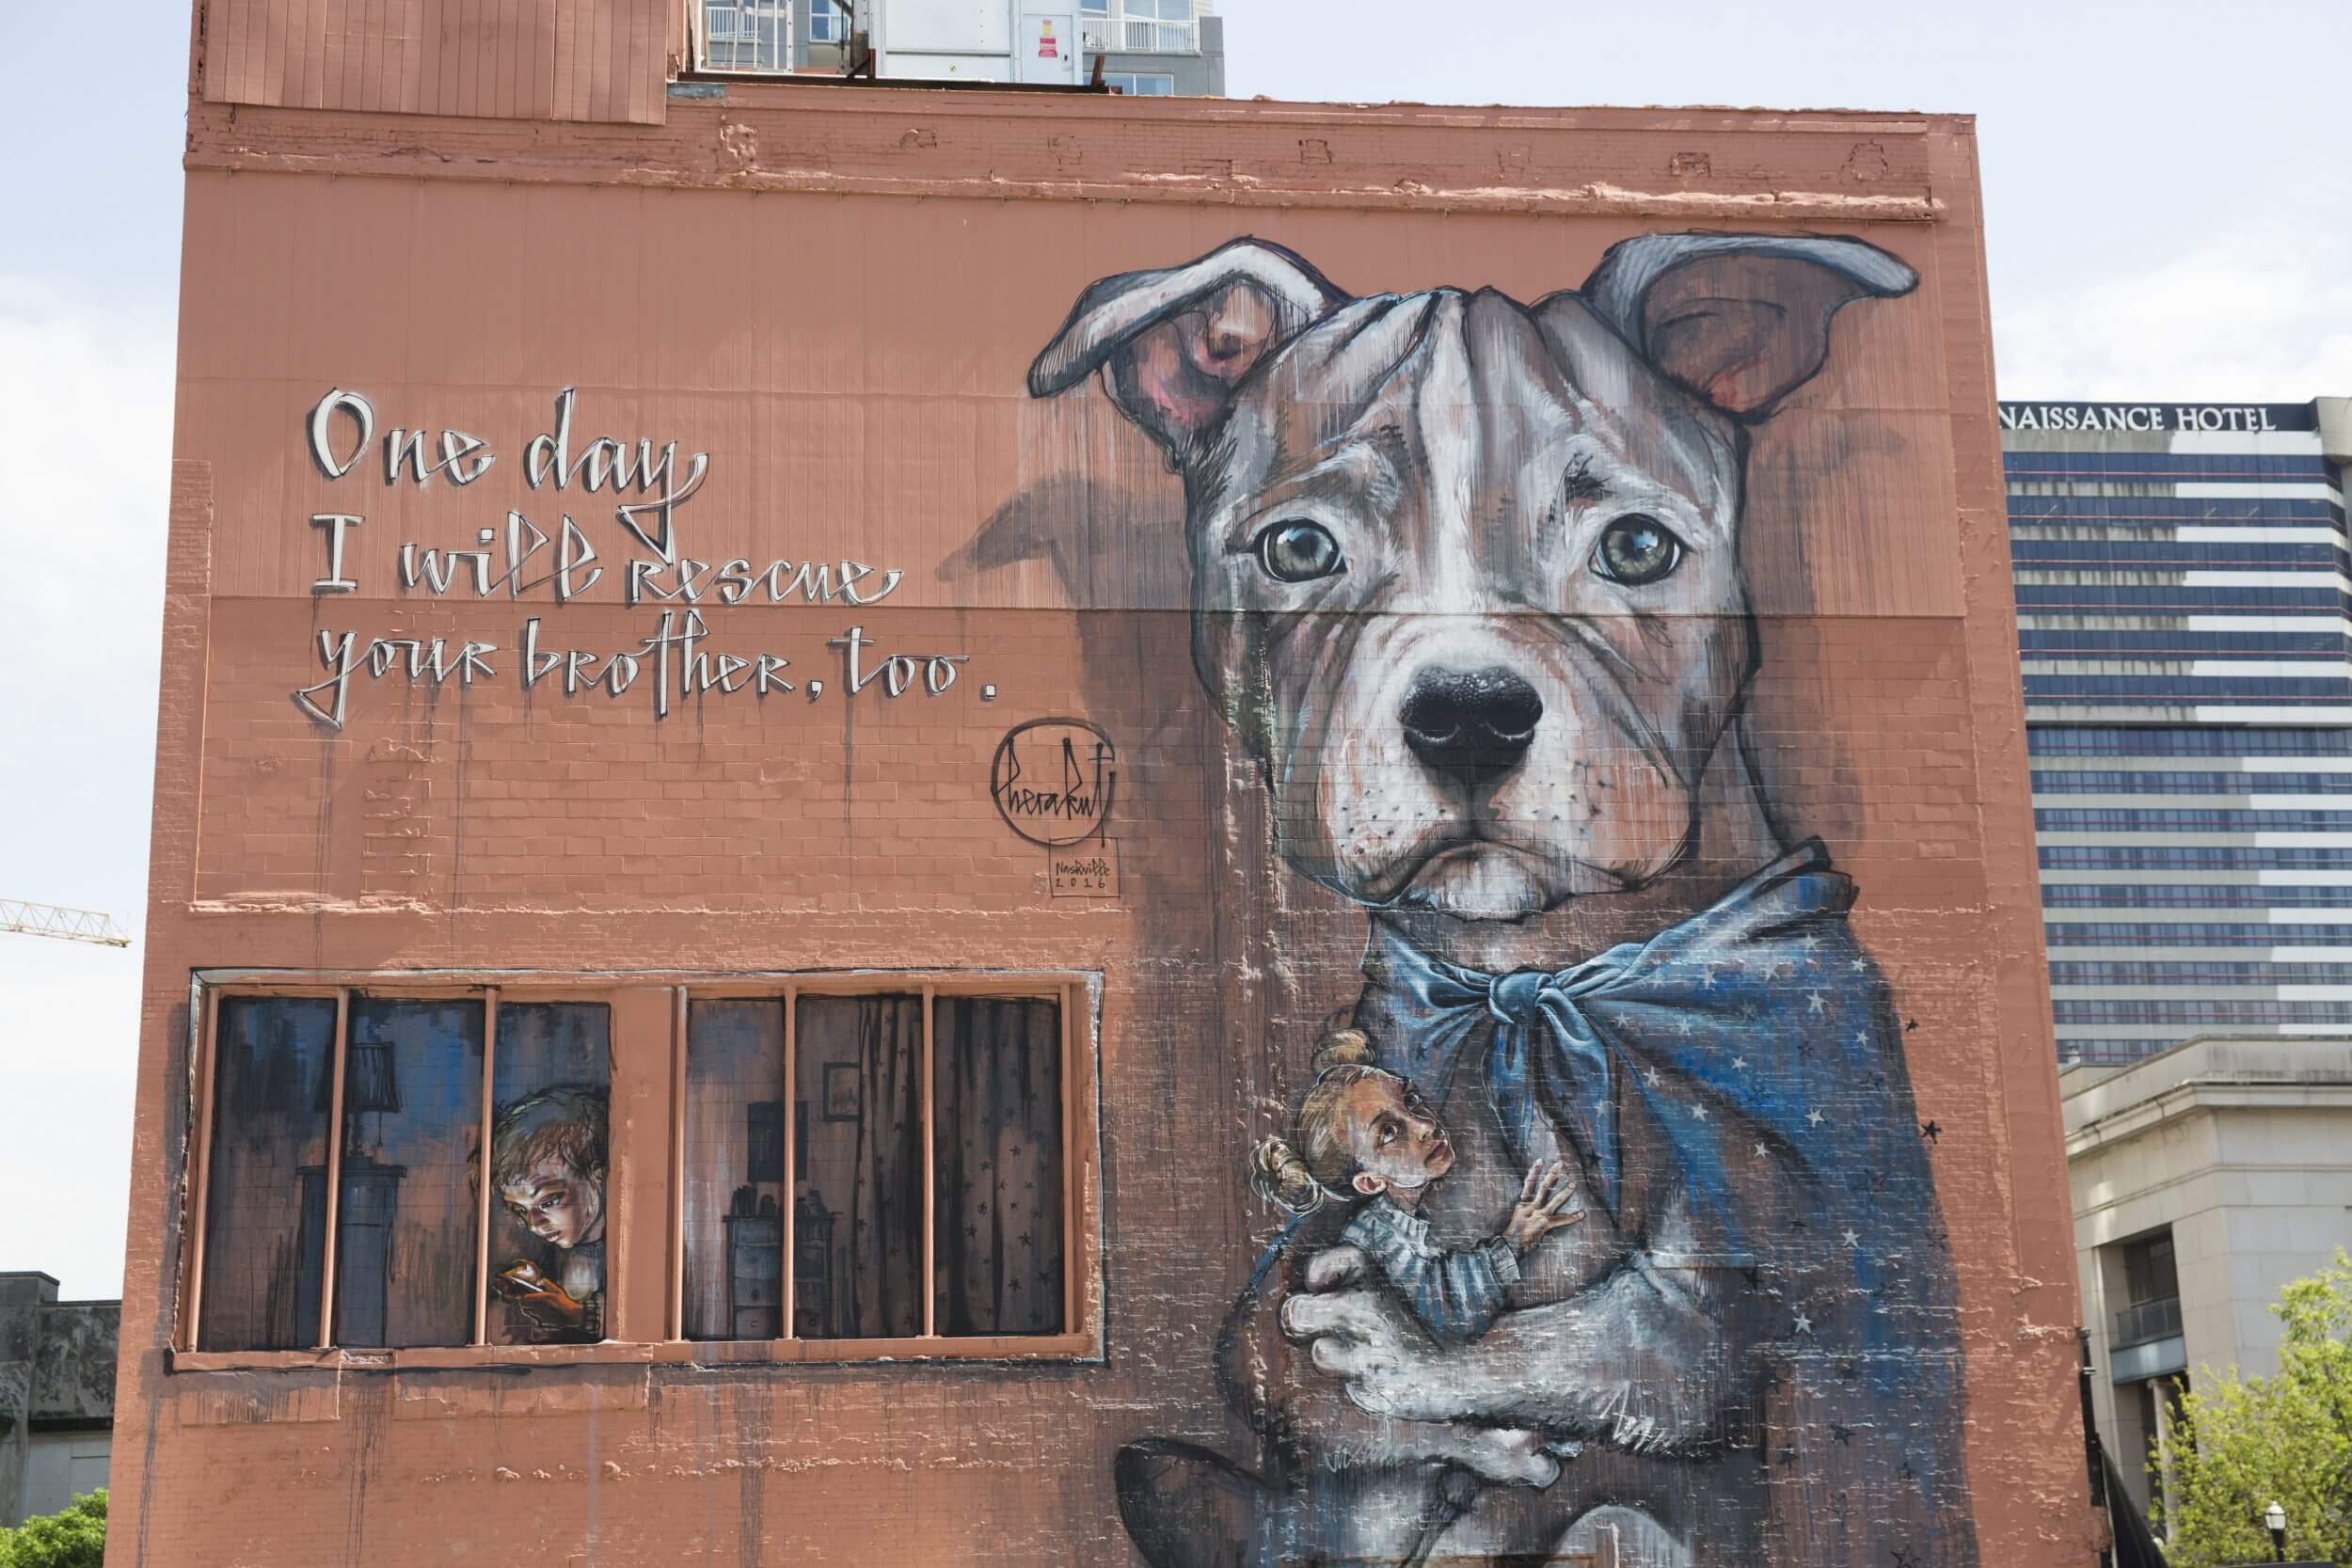 Nashville Walls Street Art Project, Tennessee, 2016